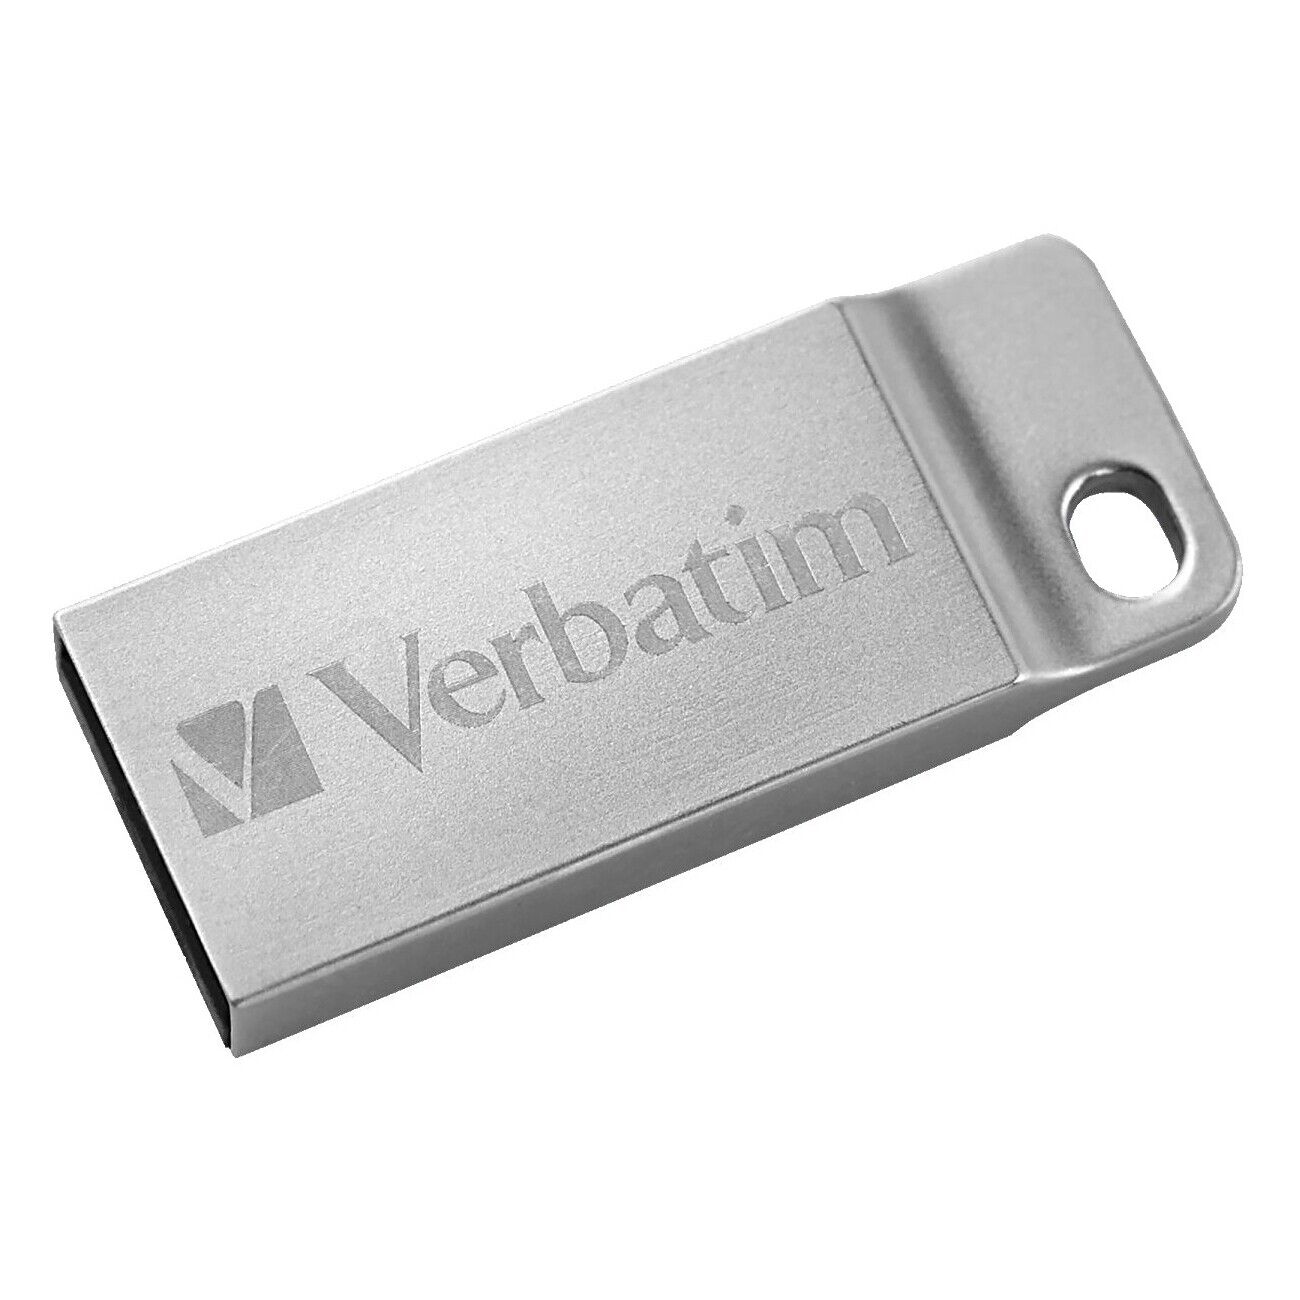 Verbatim 32gb Metal Executive Usb Flash Drive - Silver - 32 Gbusb 2.0 - Silver